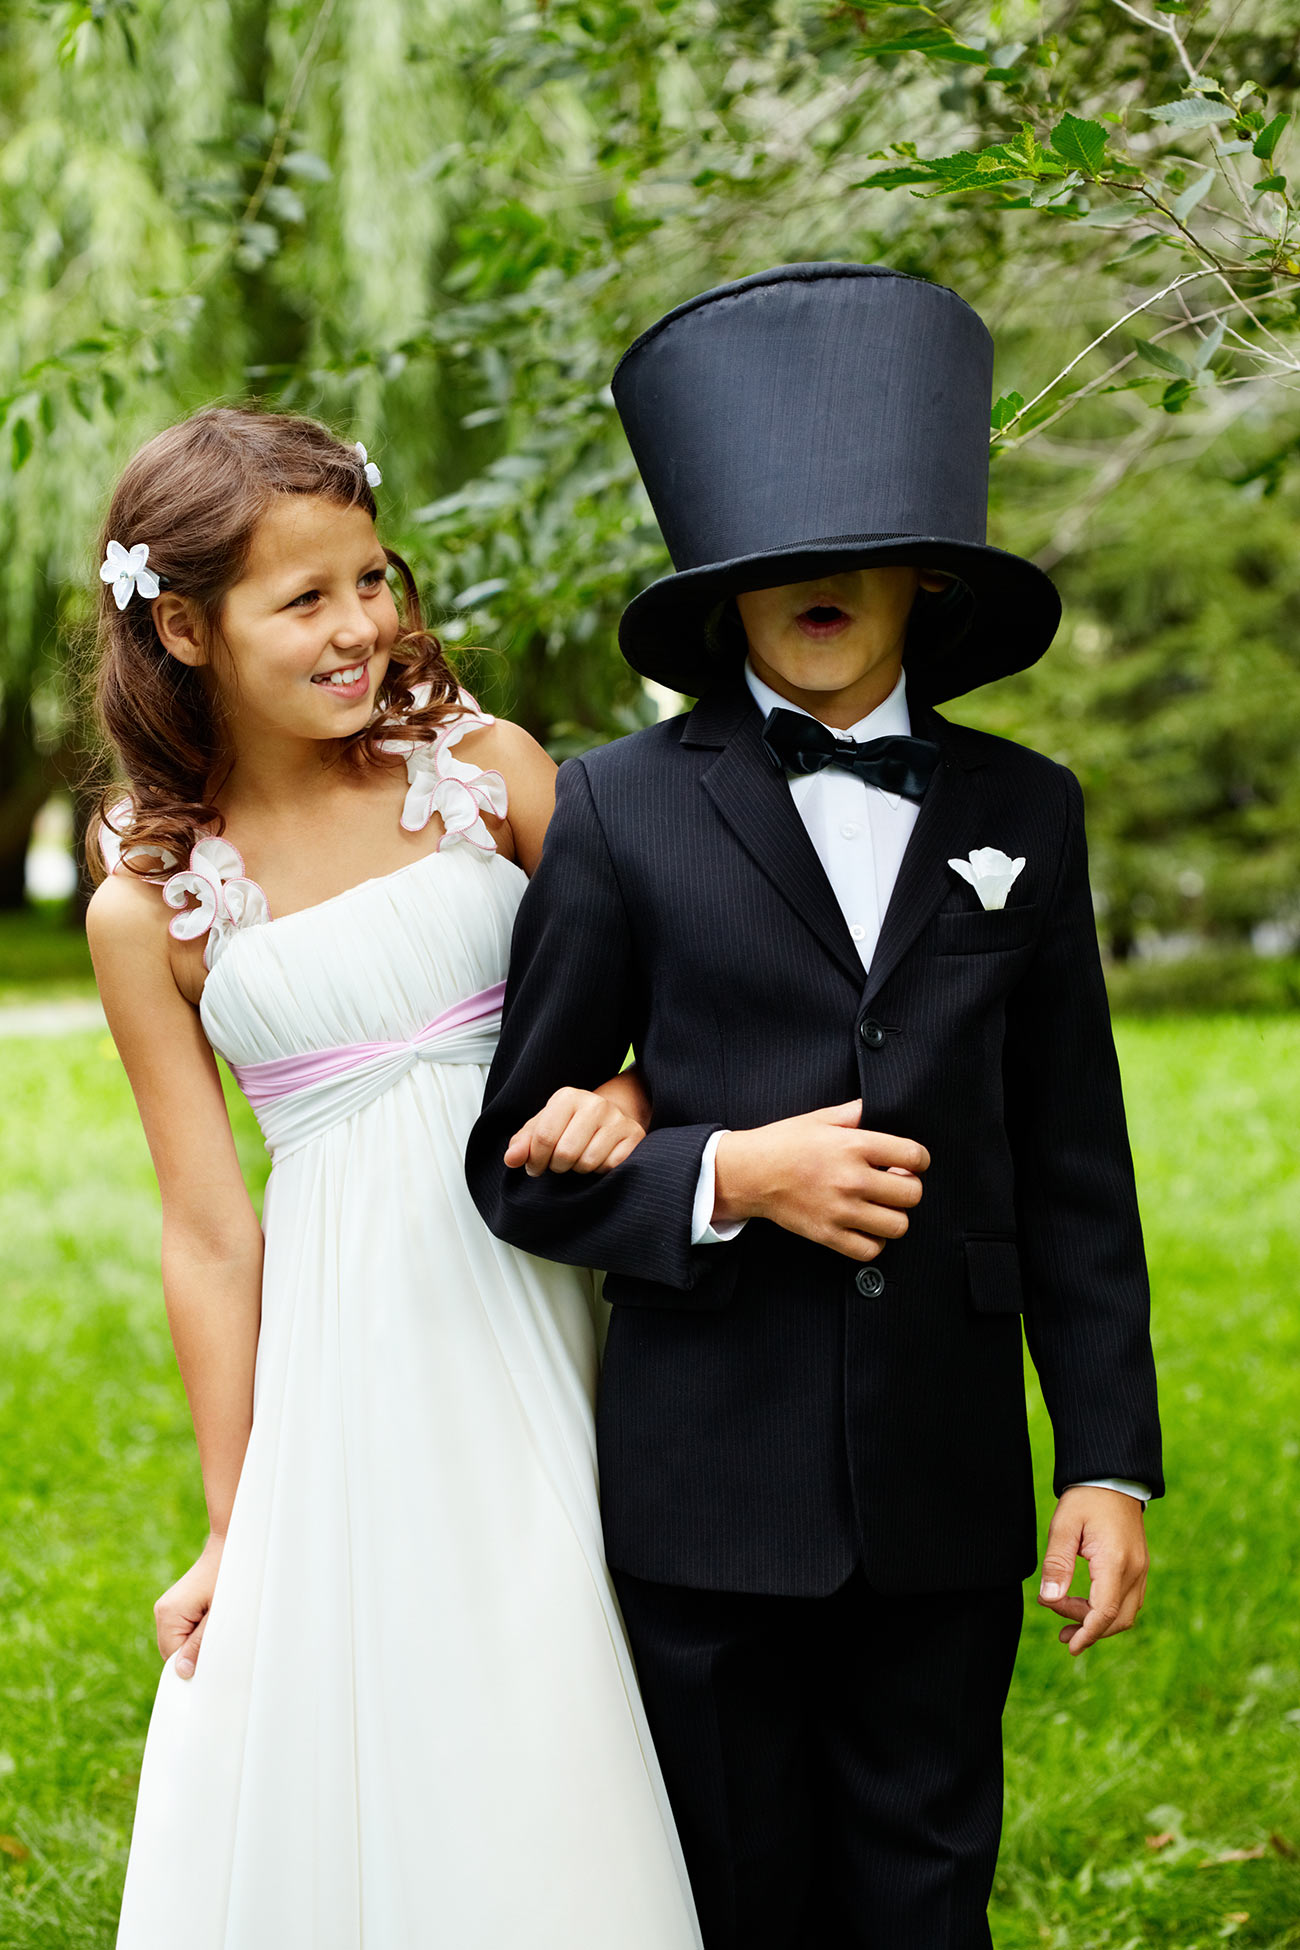 Children At Weddings Receptions2